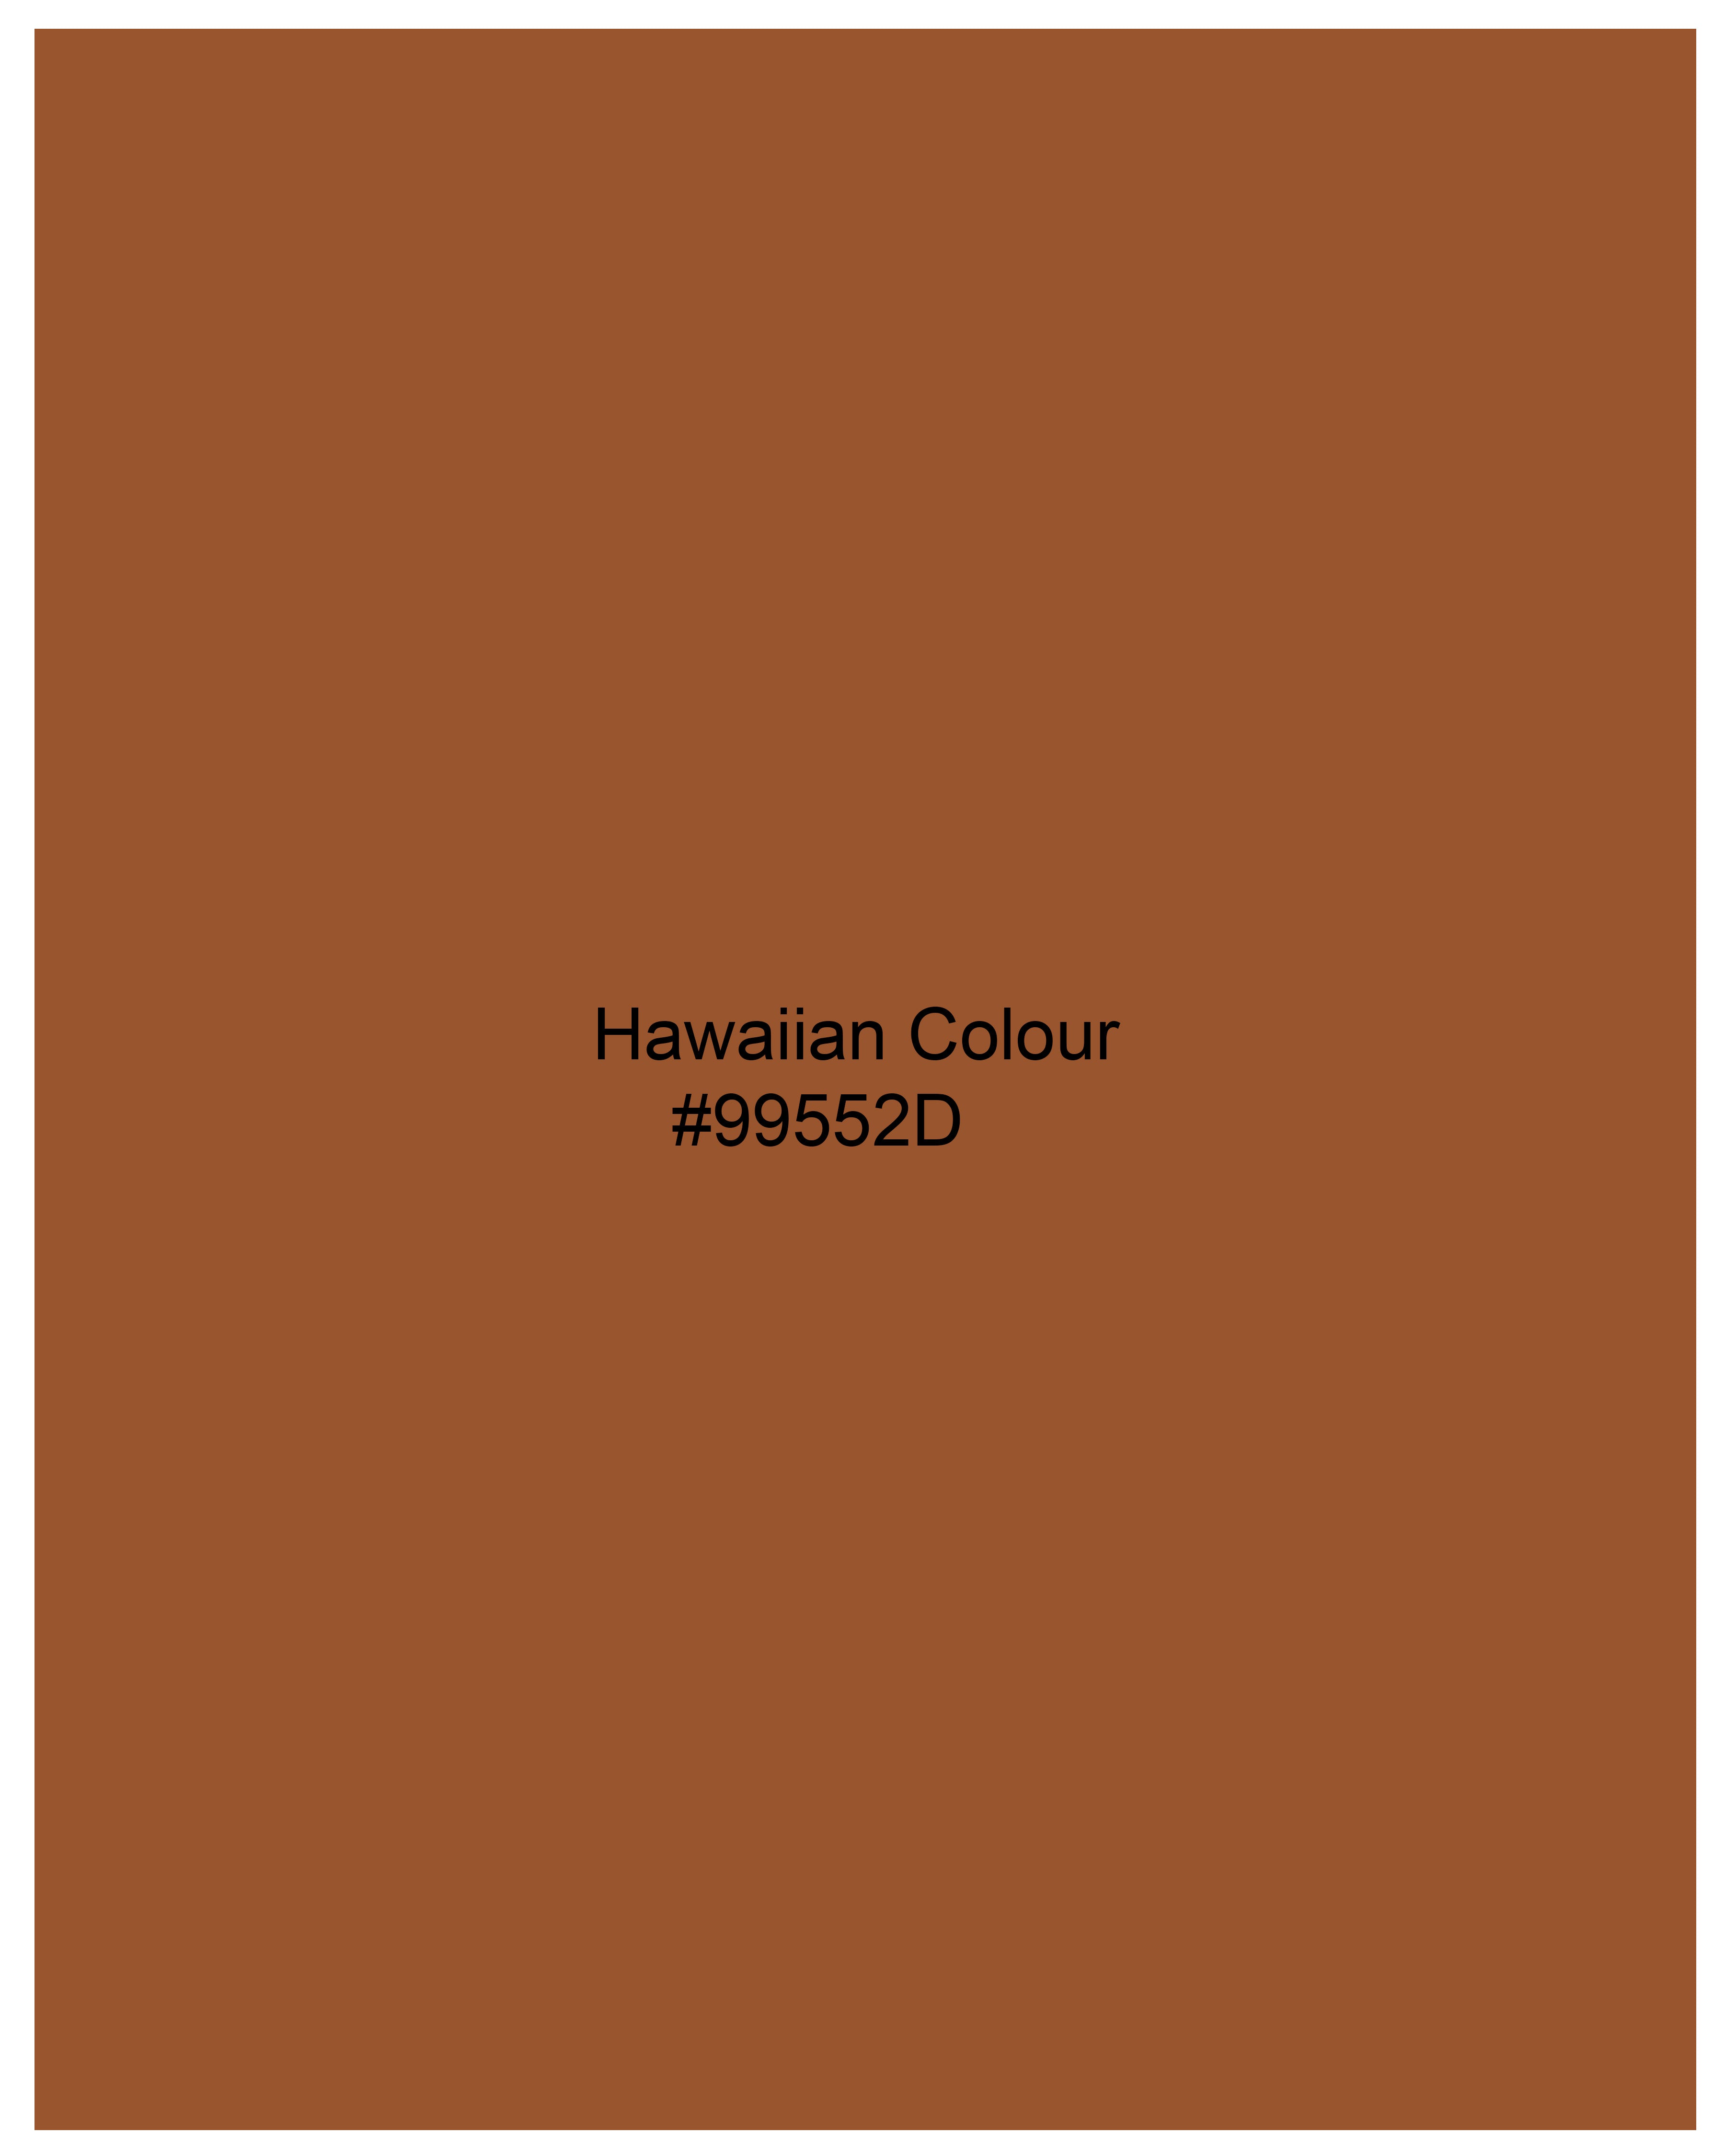 Hawaiian Brown Flannel Designer Shirt  8590-BLK-BJ21-38,8590-BLK-BJ21-H-38,8590-BLK-BJ21-39,8590-BLK-BJ21-H-39,8590-BLK-BJ21-40,8590-BLK-BJ21-H-40,8590-BLK-BJ21-42,8590-BLK-BJ21-H-42,8590-BLK-BJ21-44,8590-BLK-BJ21-H-44,8590-BLK-BJ21-46,8590-BLK-BJ21-H-46,8590-BLK-BJ21-48,8590-BLK-BJ21-H-48,8590-BLK-BJ21-50,8590-BLK-BJ21-H-50,8590-BLK-BJ21-52,8590-BLK-BJ21-H-52